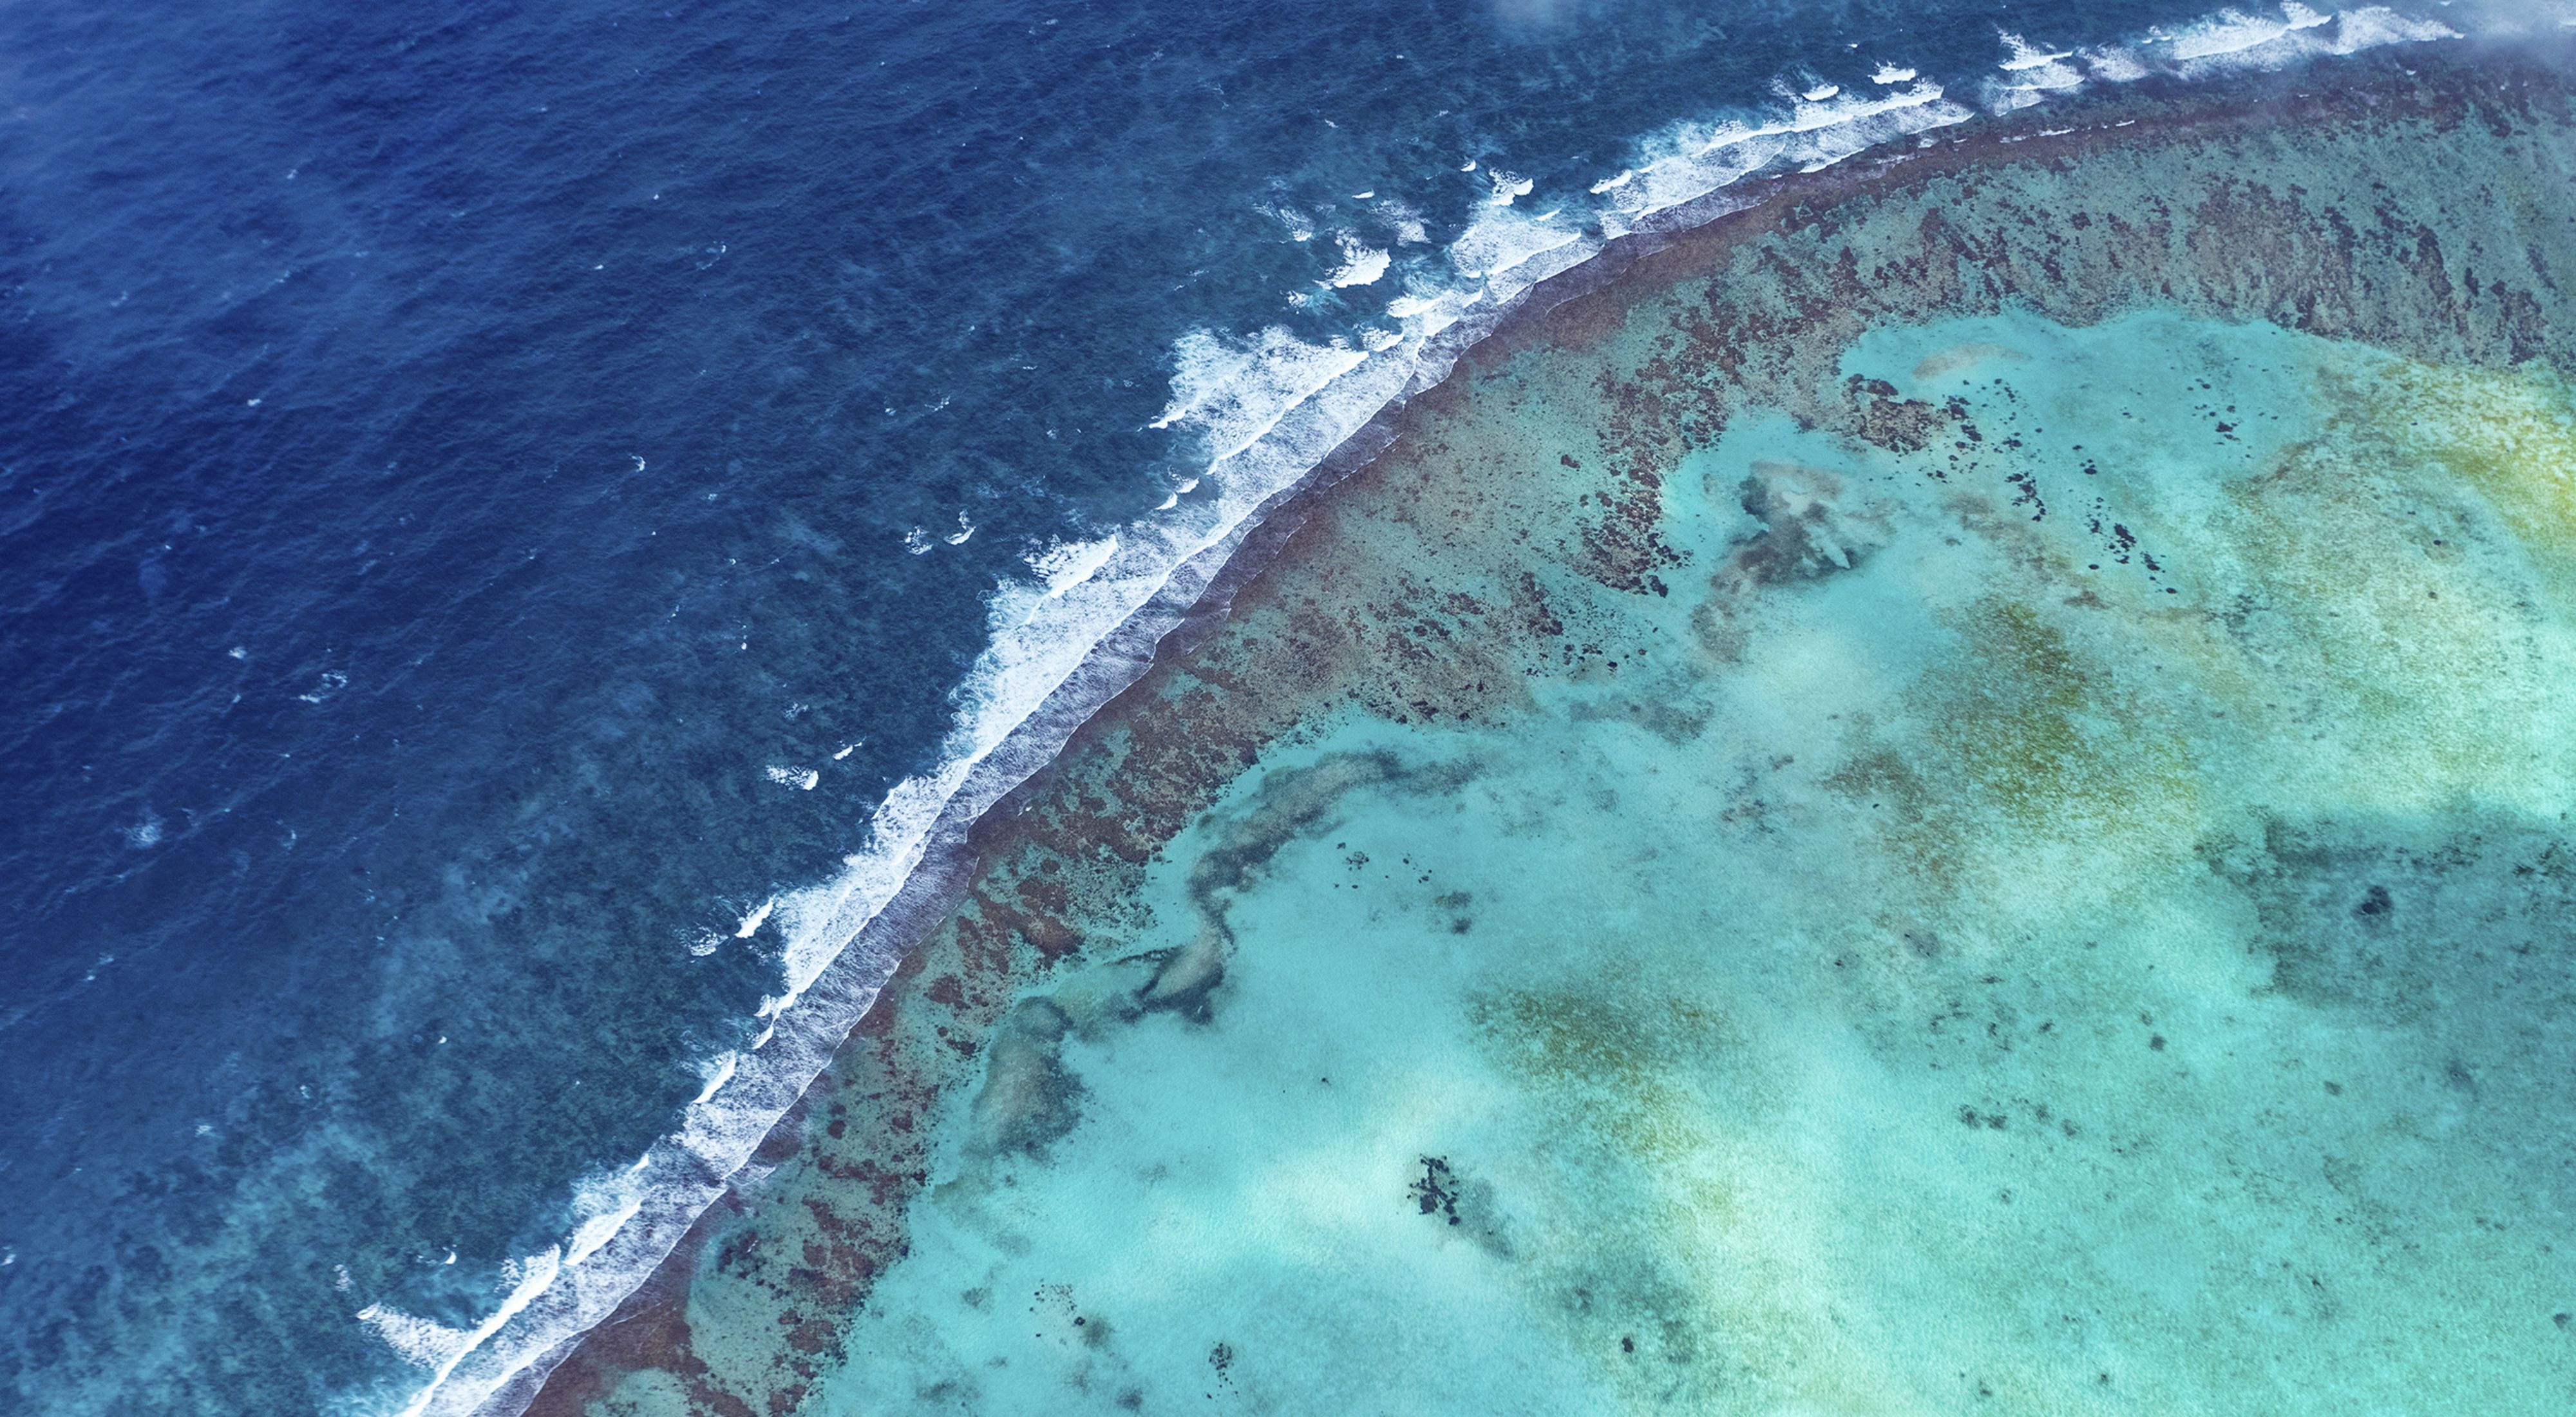 Belize's Barrier Reef